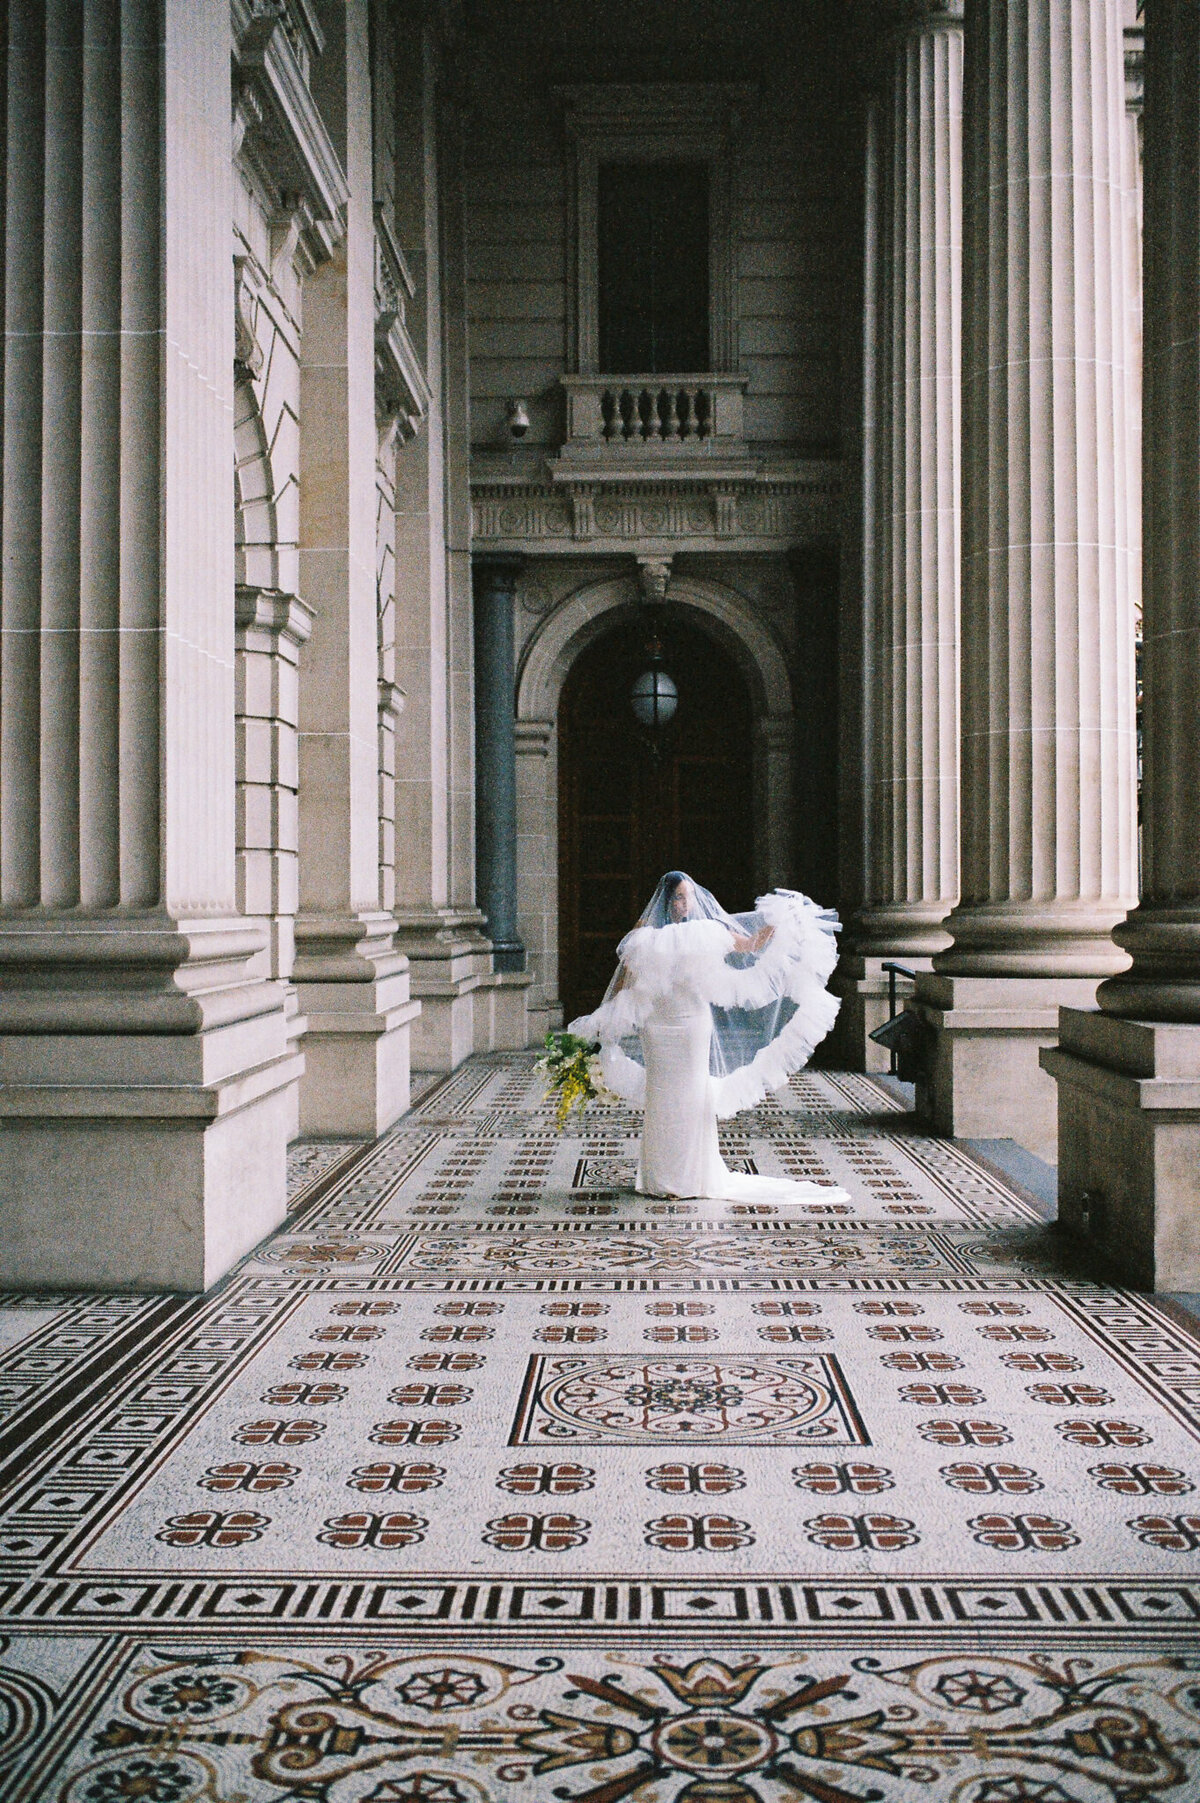 Perth Wedding Photographer Kath Young - detials 35mm film photos-24